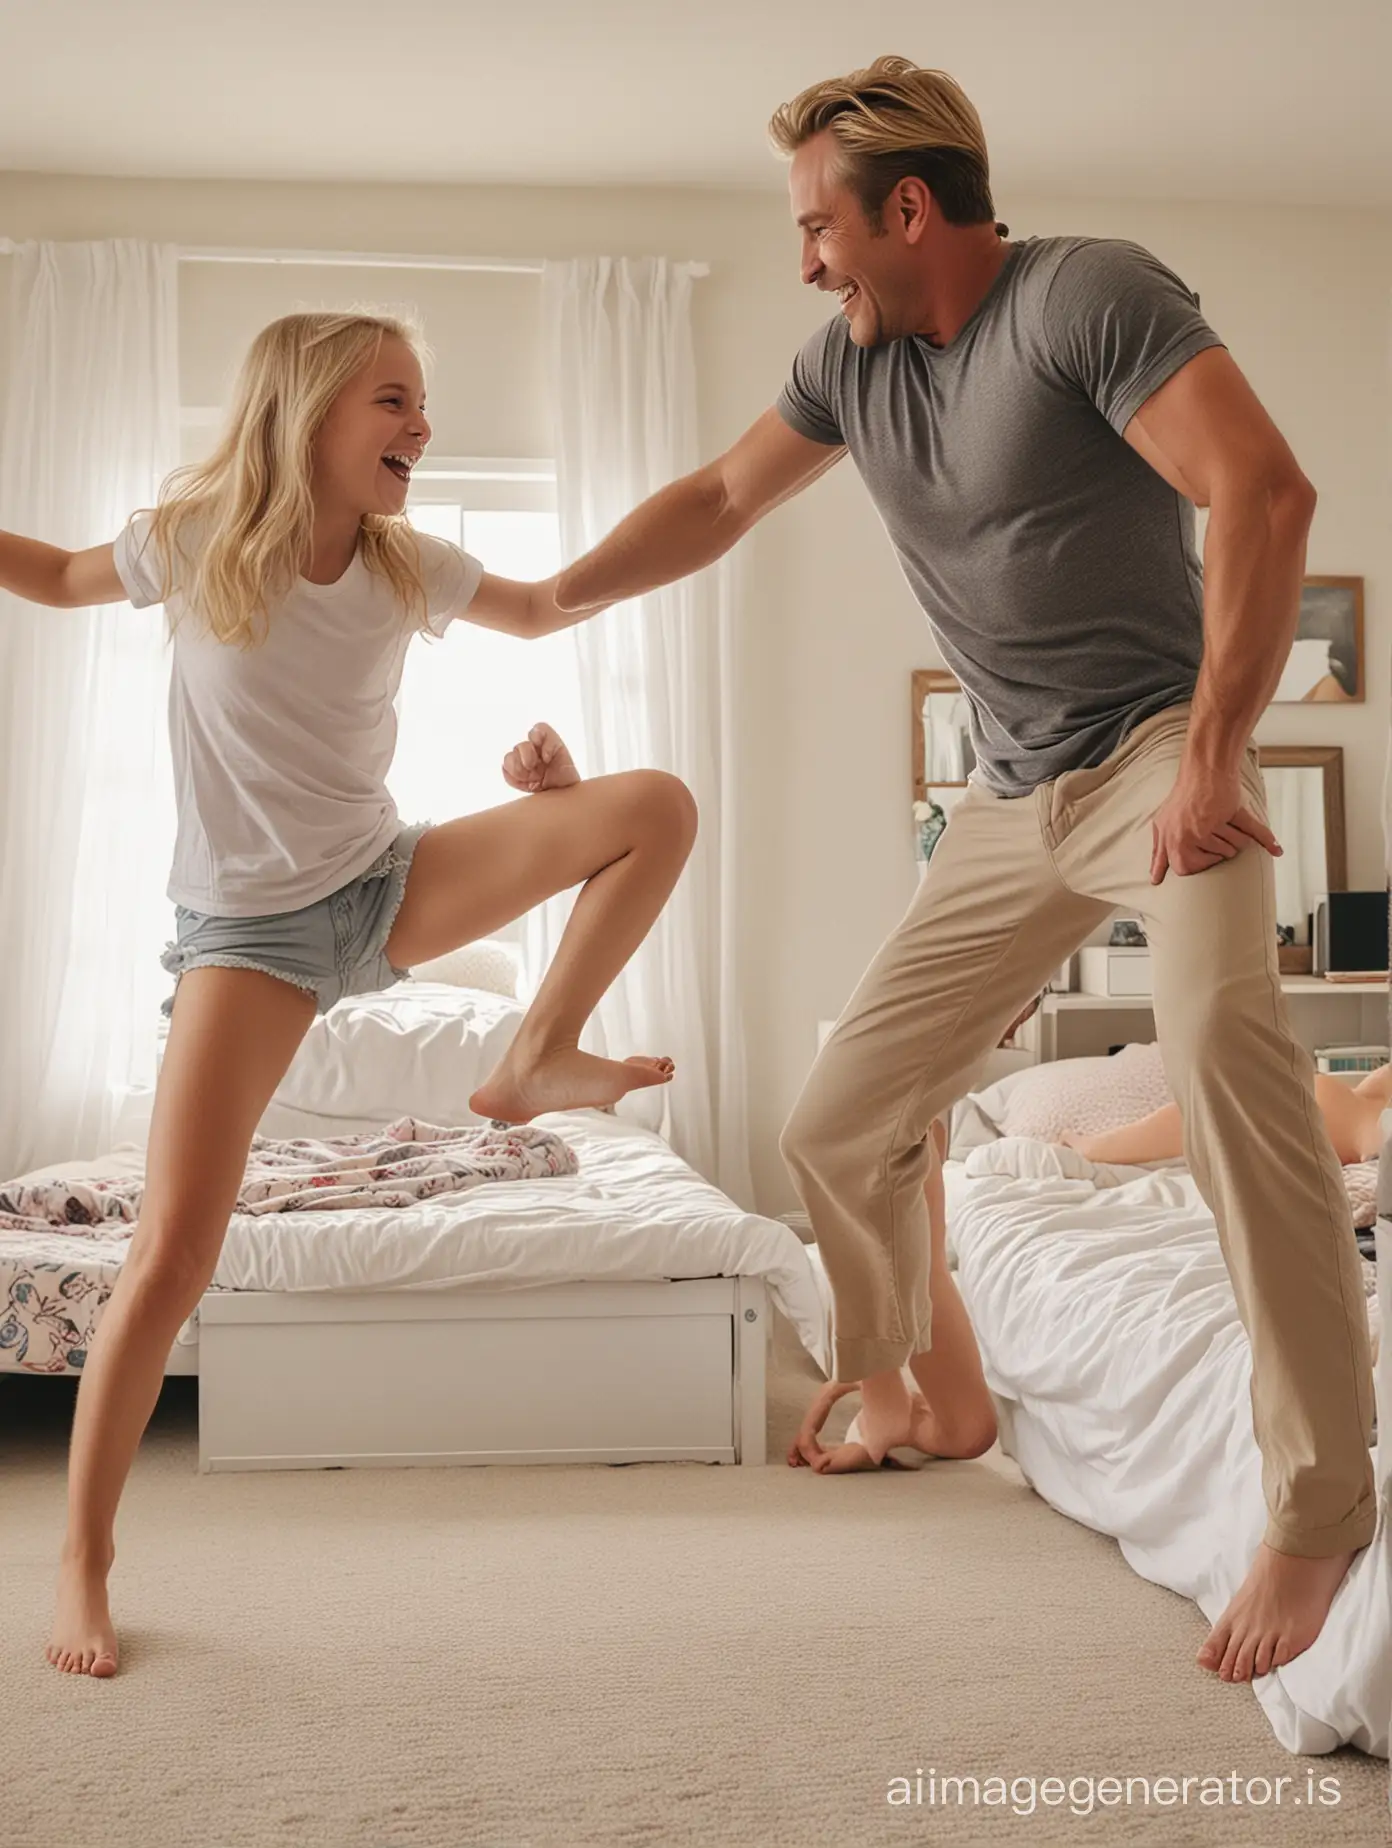 an 11 year old blonde girl kicking a grown man between his legs, smiling, bedroom